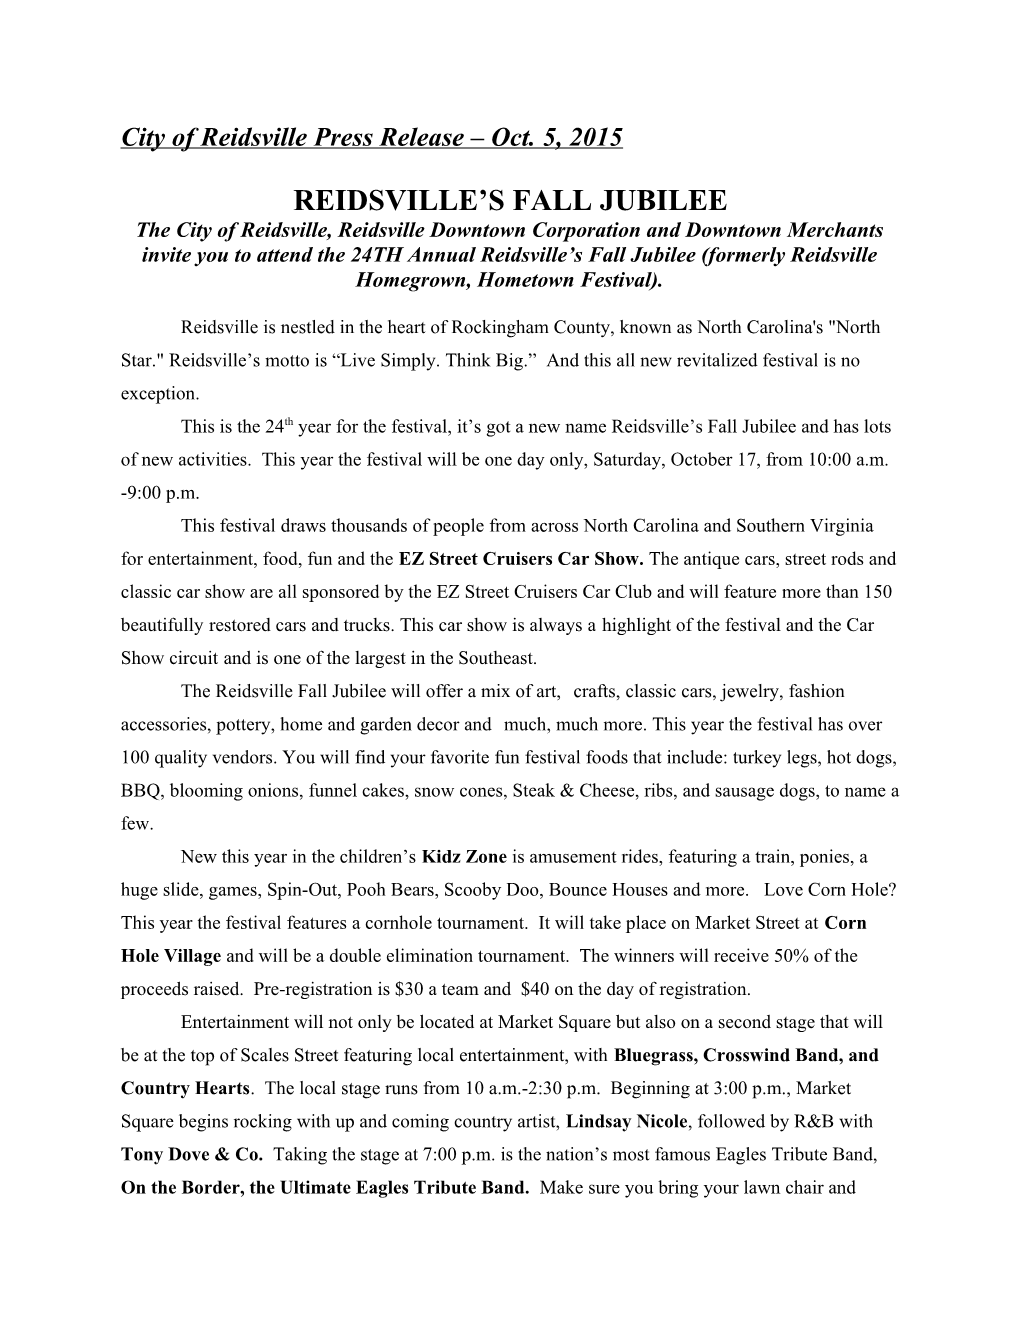 City of Reidsville Press Release Oct. 5, 2015